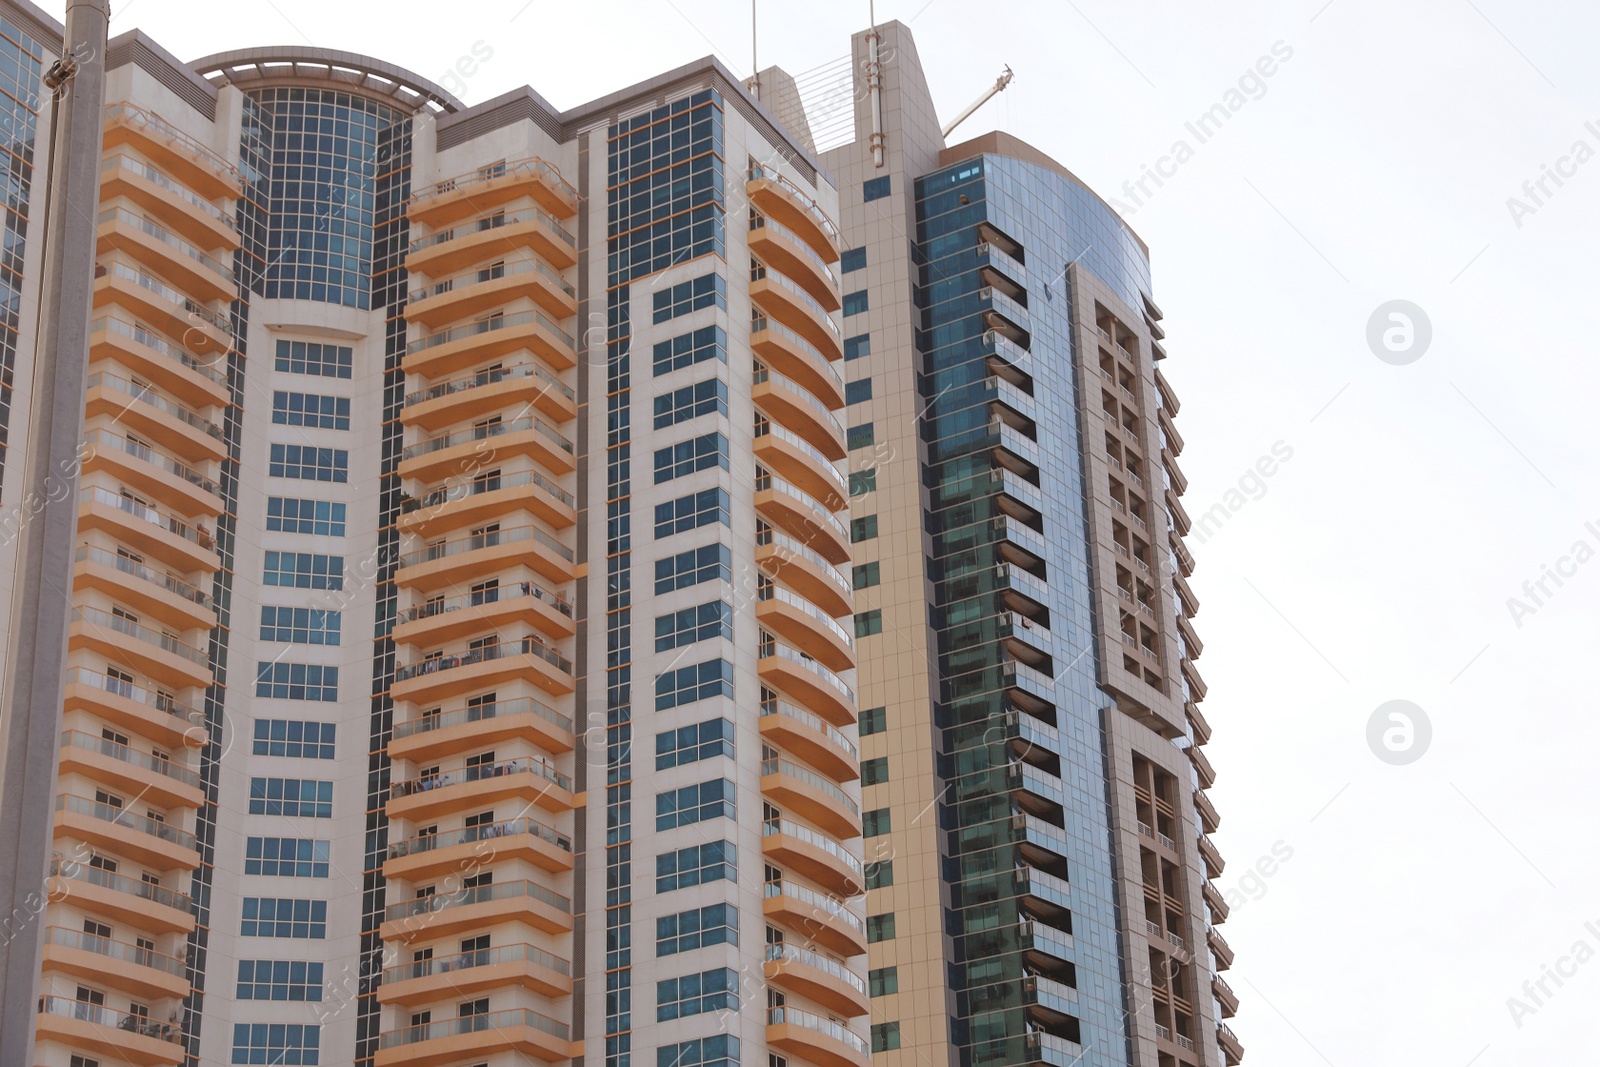 Photo of DUBAI, UNITED ARAB EMIRATES - NOVEMBER 06, 2018: Cityscape with modern buildings